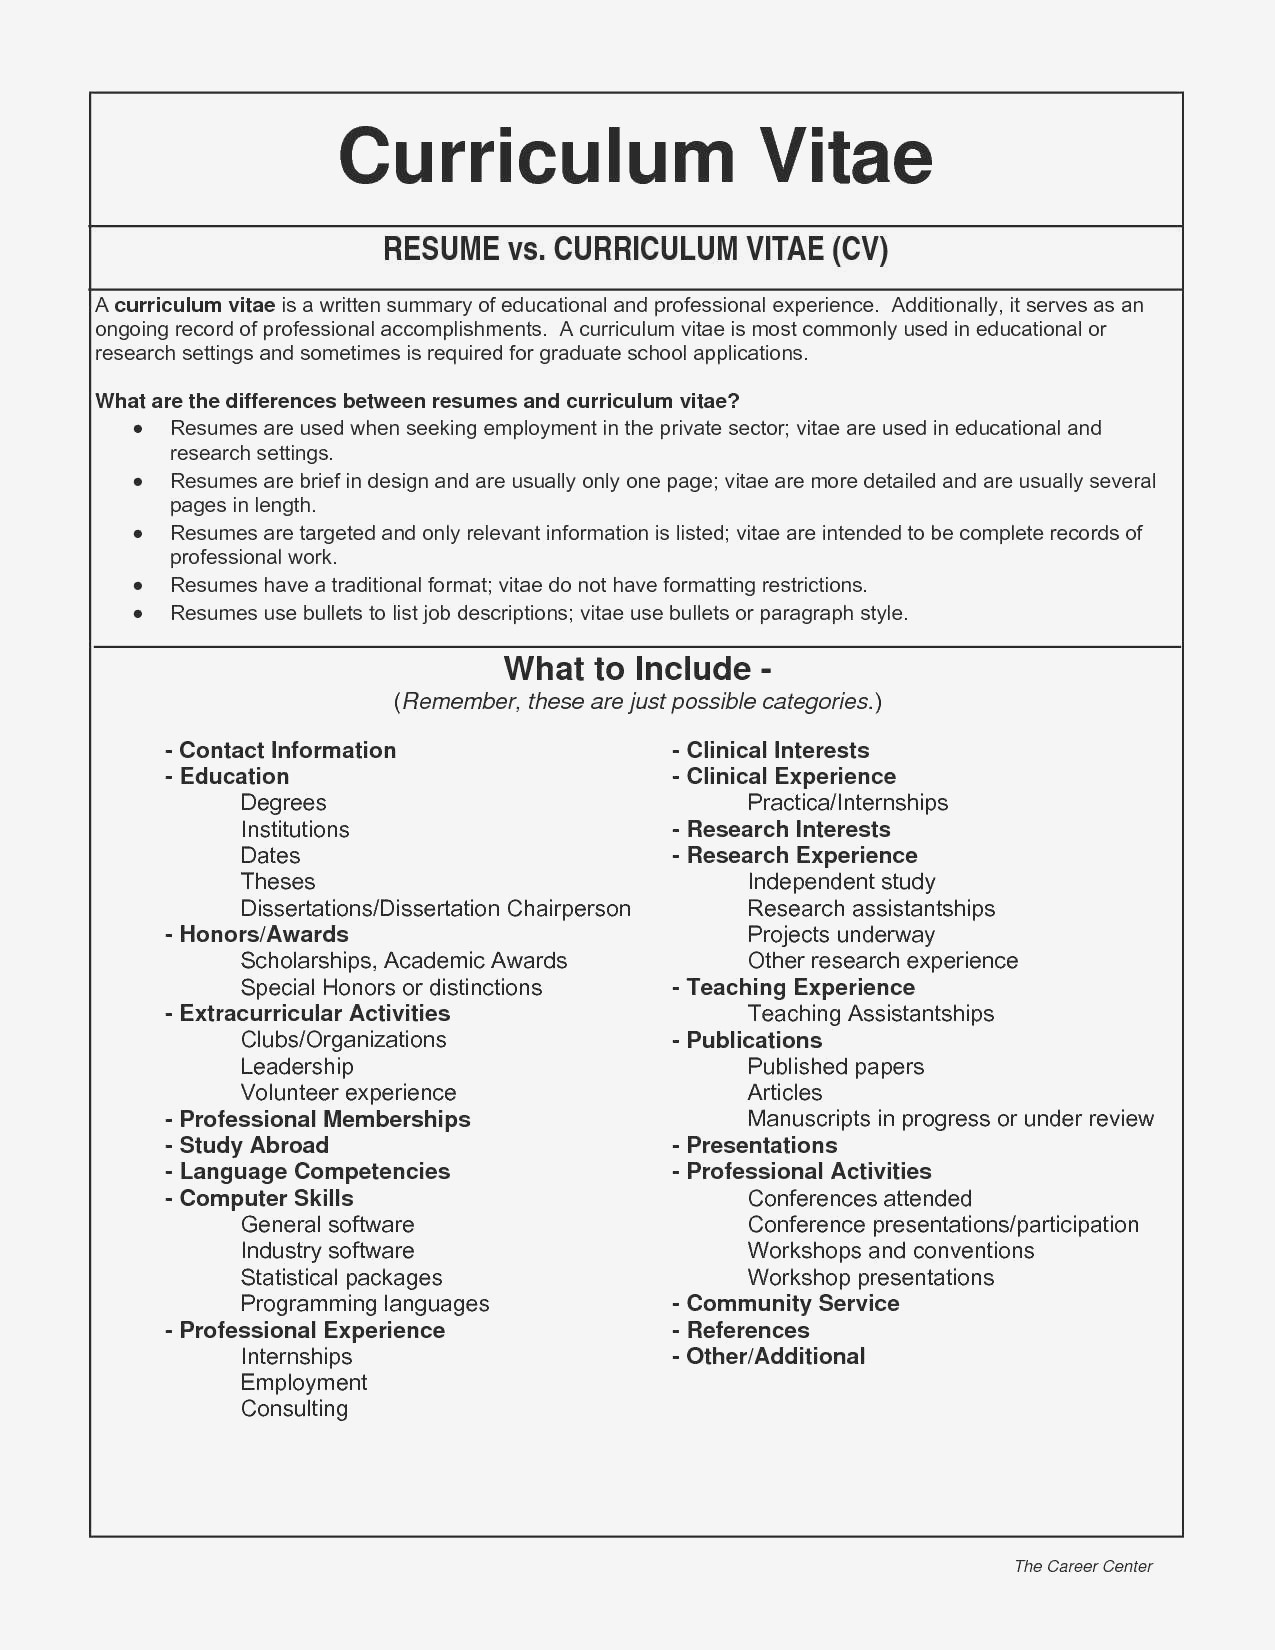 Resume For Graduate School Recommendation Letter Sample For Graduate Studies New Academic Resume Of On School resume for graduate school|wikiresume.com